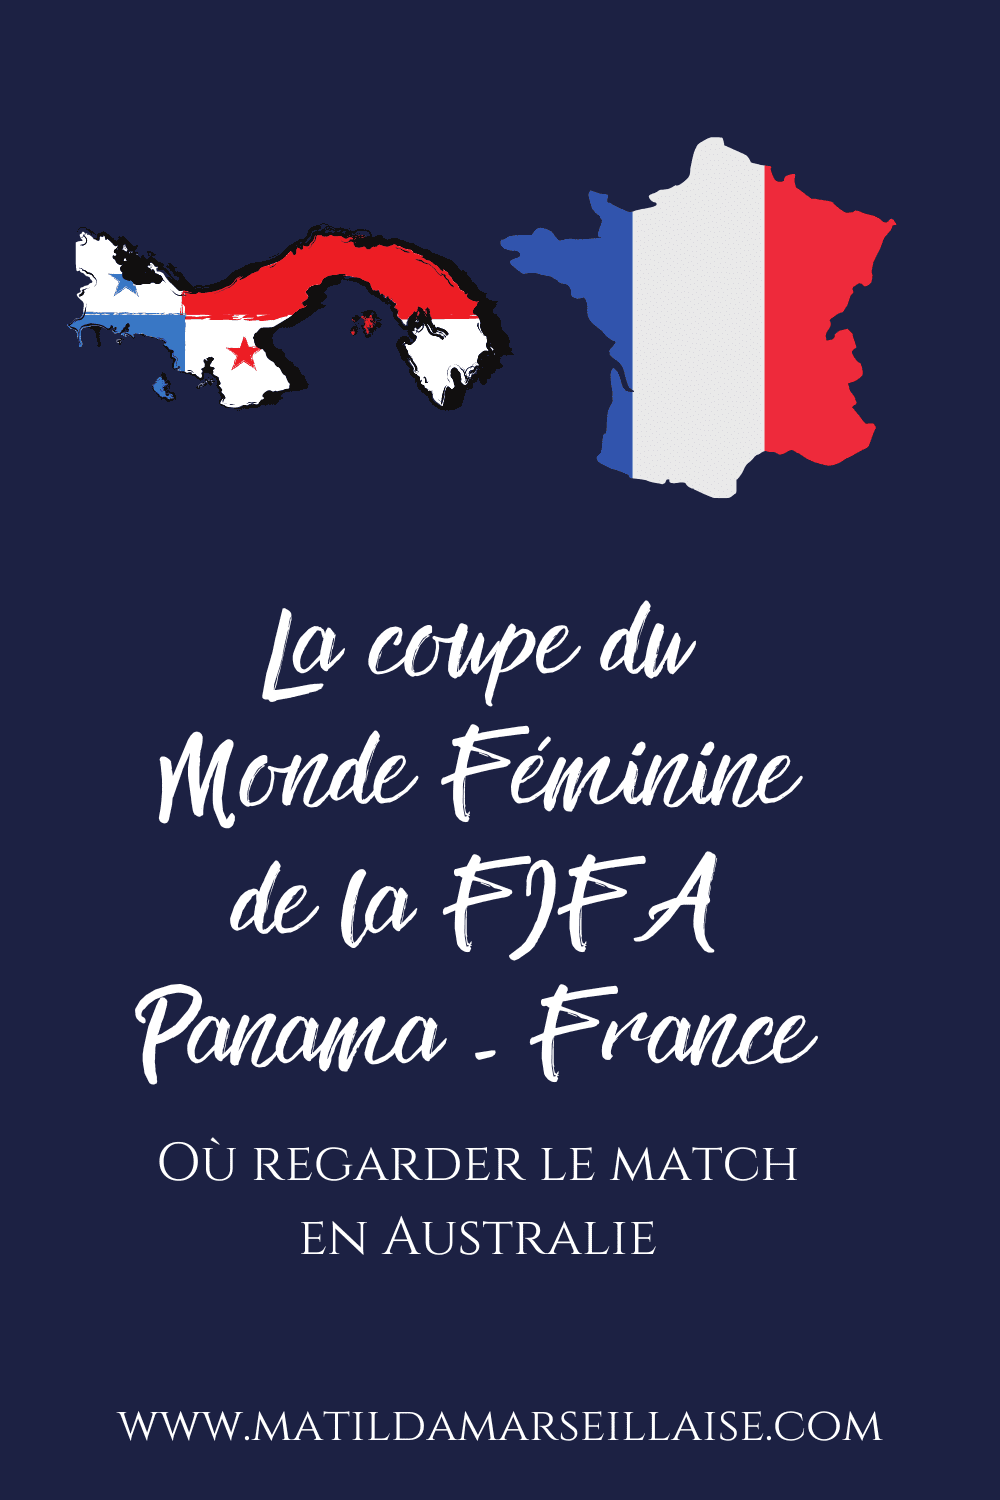 Panama - France en Australie